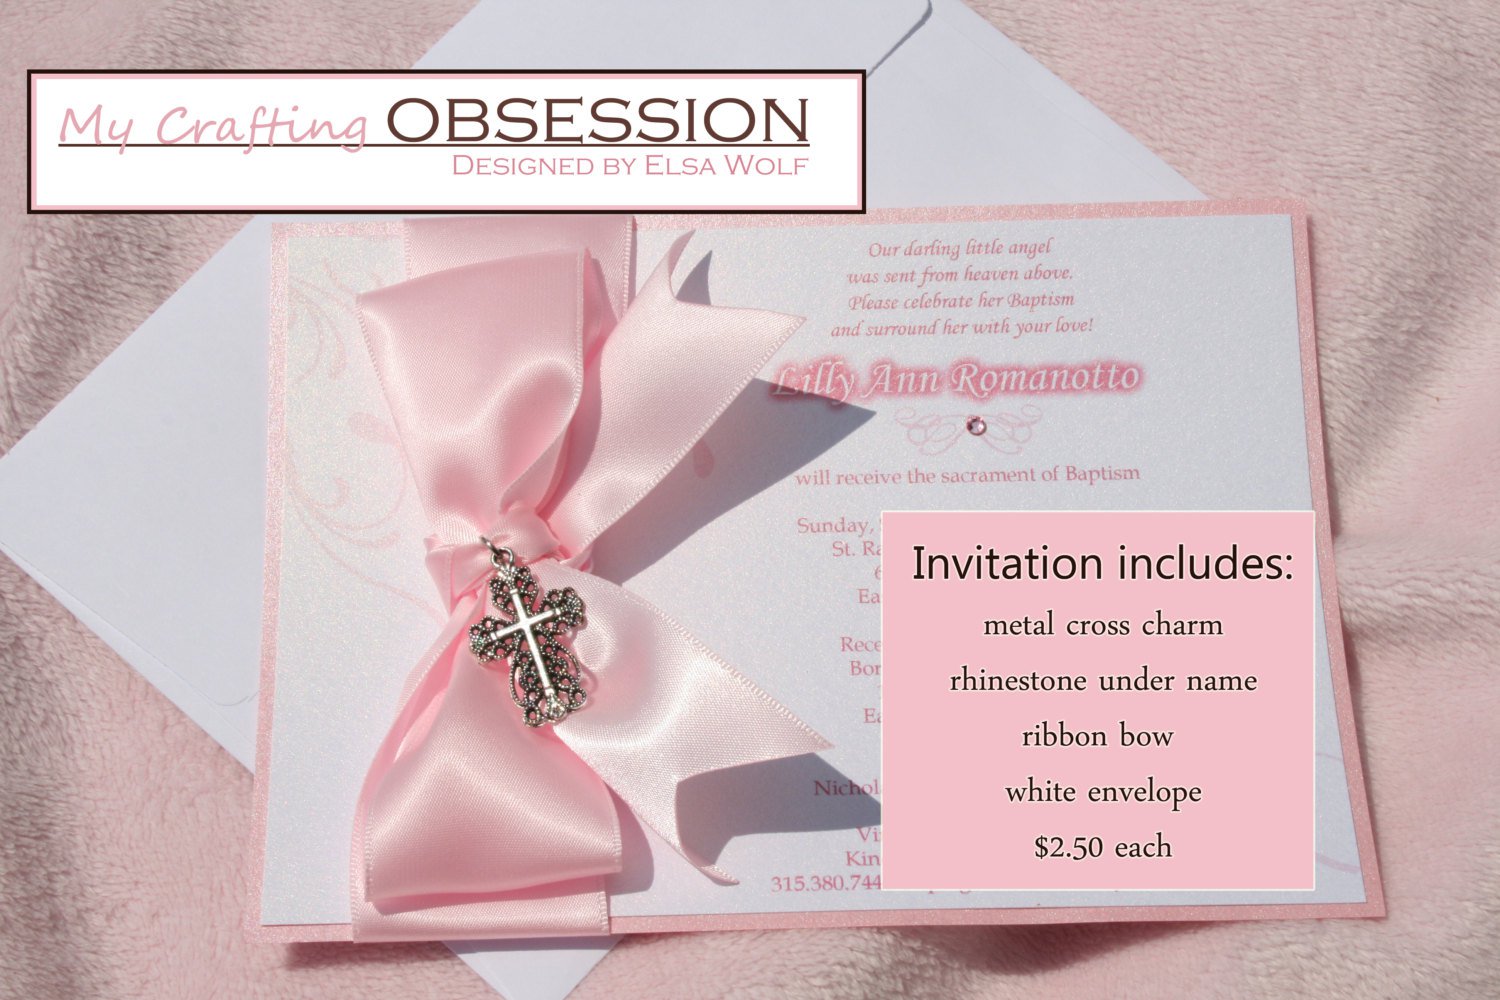 Handmade Invitation Card - Invitation Design Blog